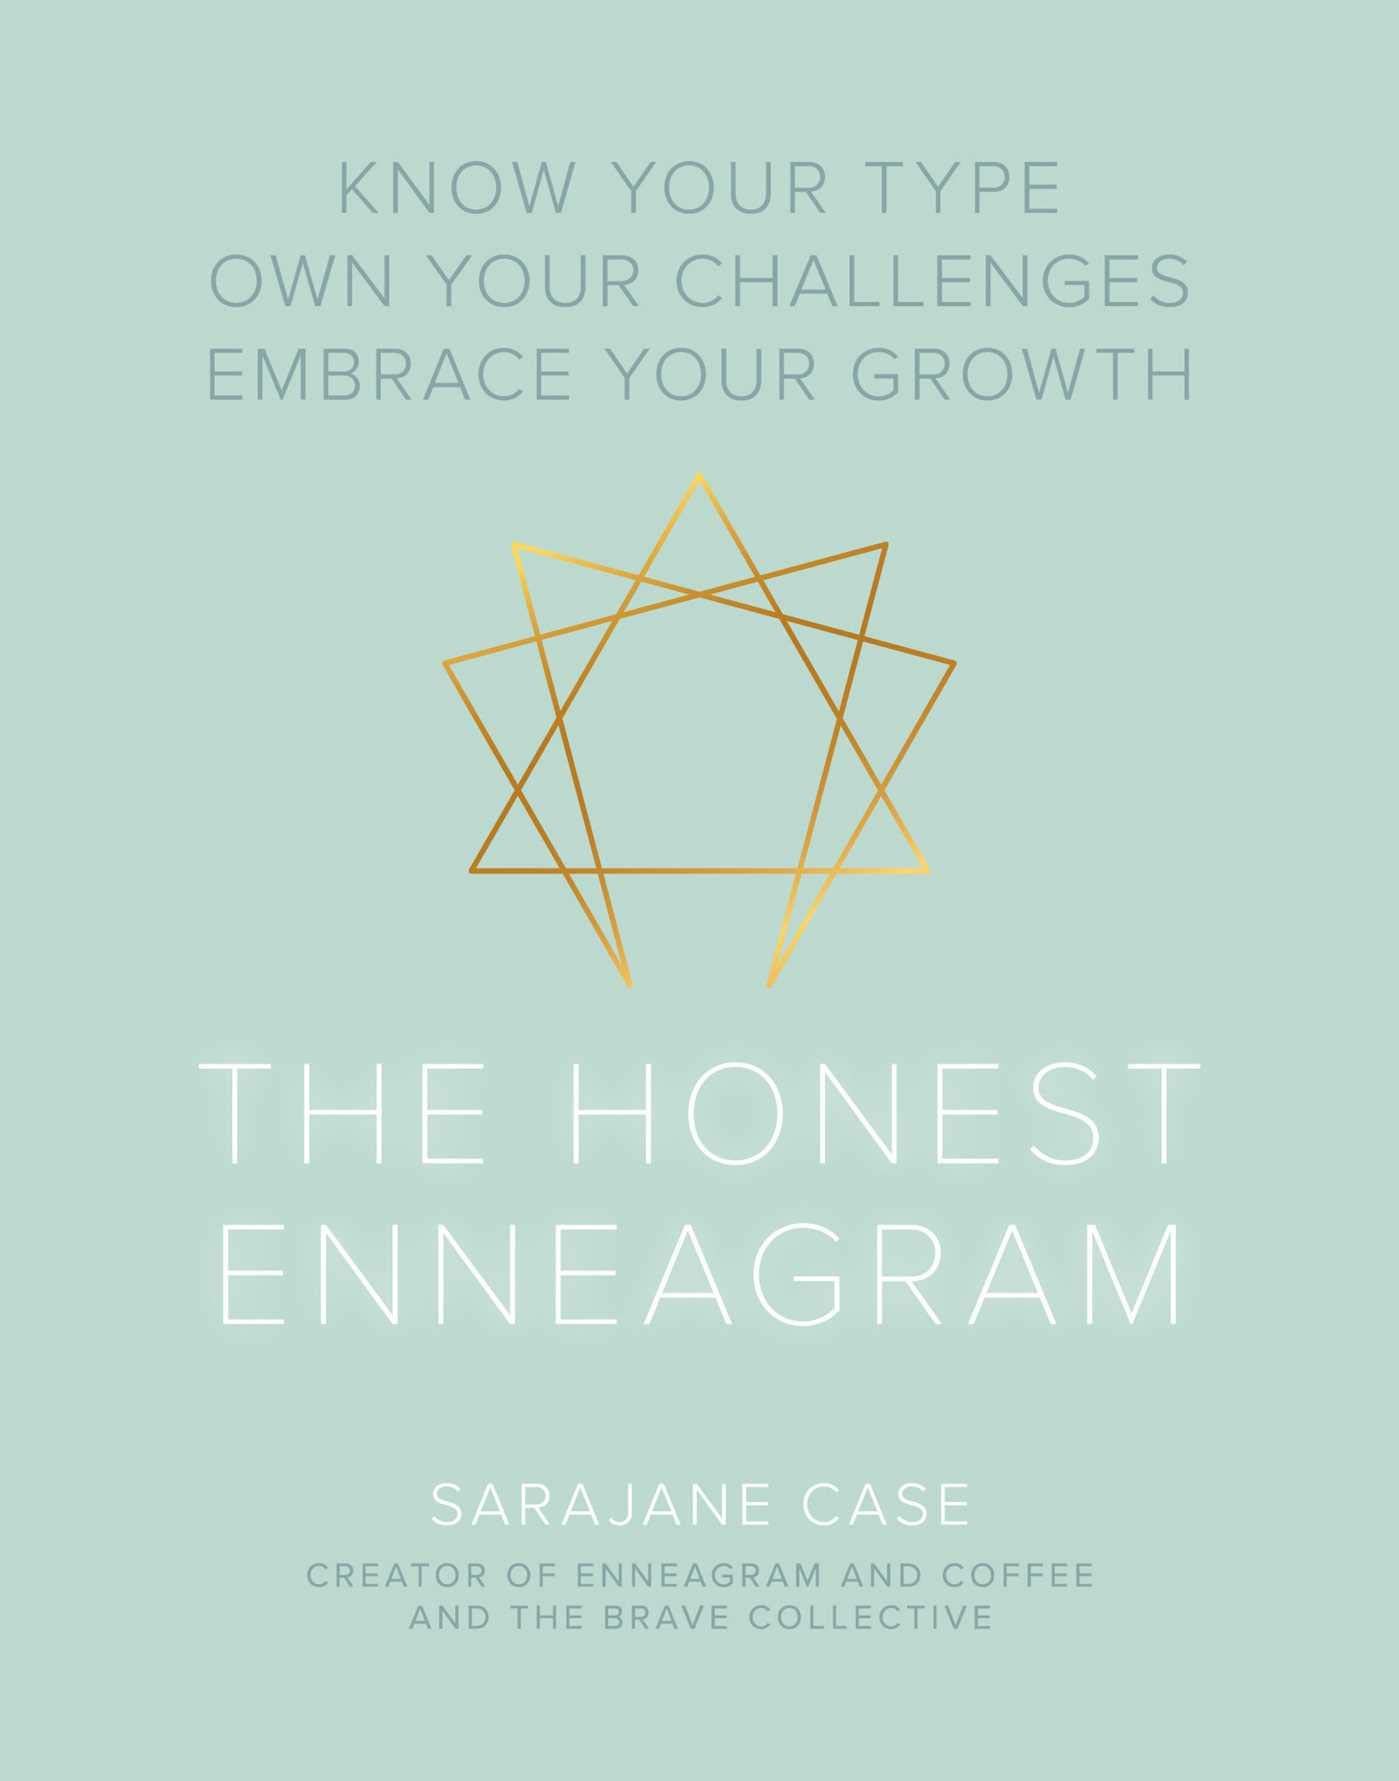 The Honest Enneagram by Sarajane Case